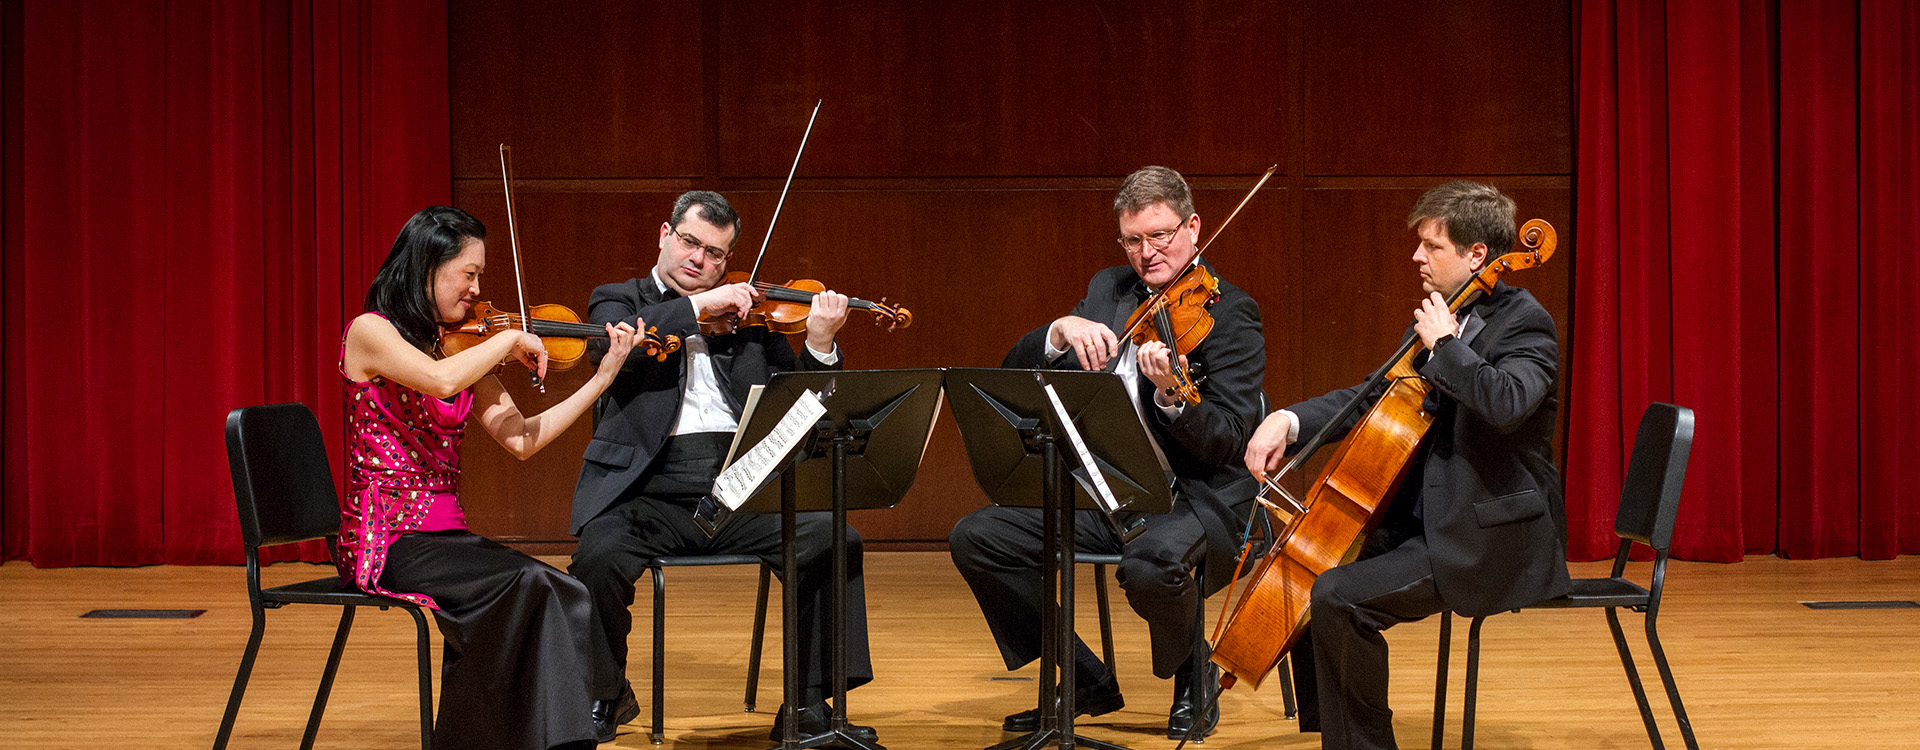 Philomusica Quartet on Schwan Concert Hall stage with instruments